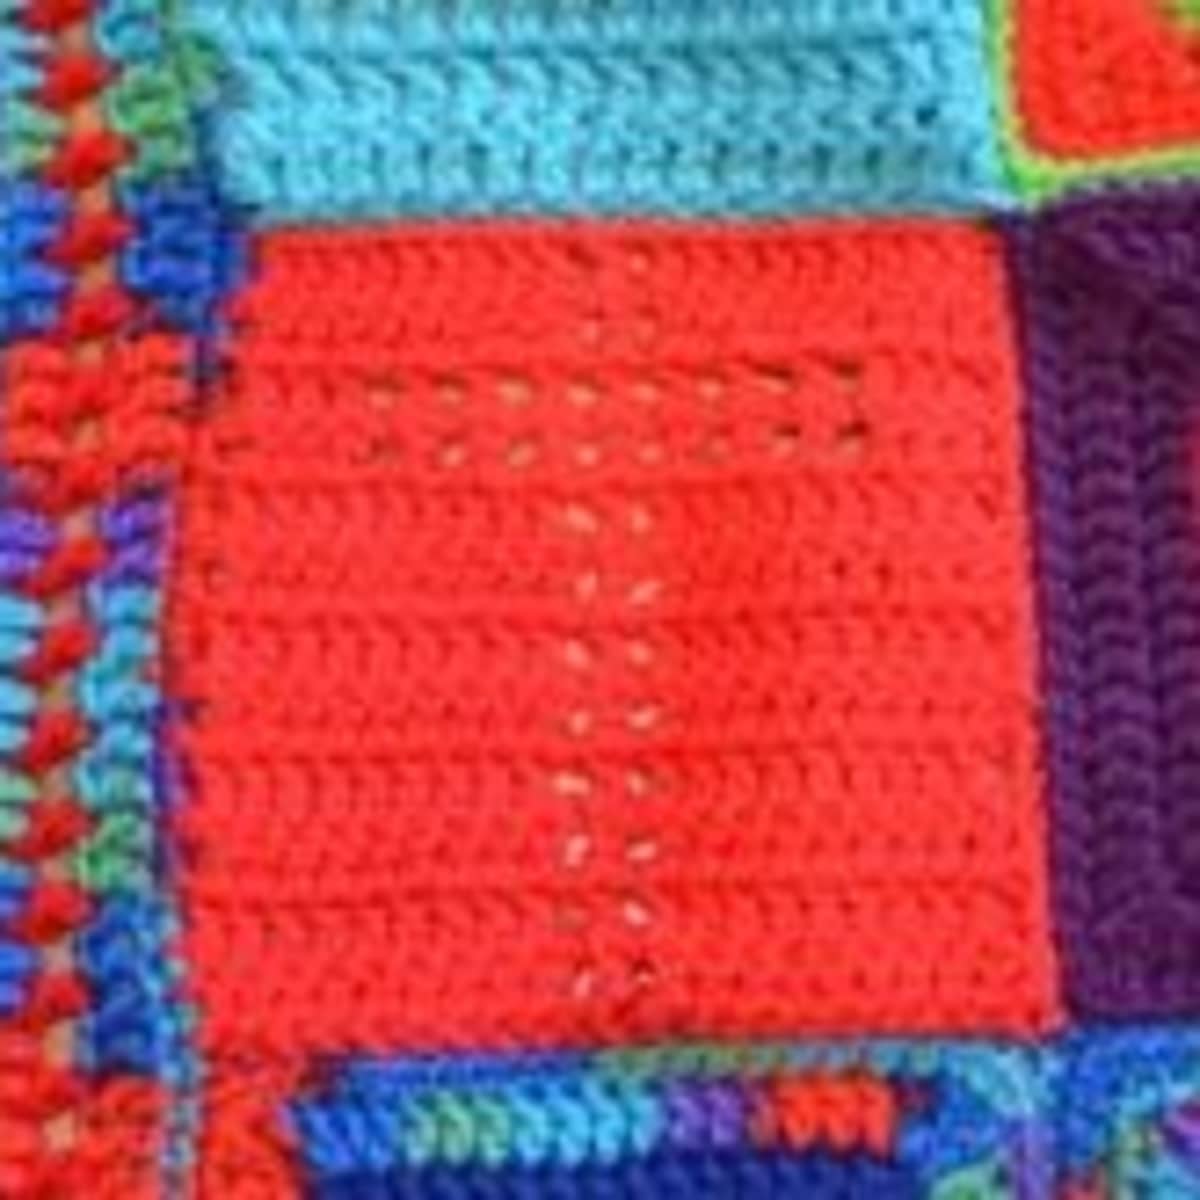 Leisure Arts Afghans For All Seasons #2 Crochet Book, Crochet Patterns,  Crochet Afghan Pattern Books, Leisure Arts Crochet Books, Crochet Blanket  Pattern Books, Afghan Crochet Patterns